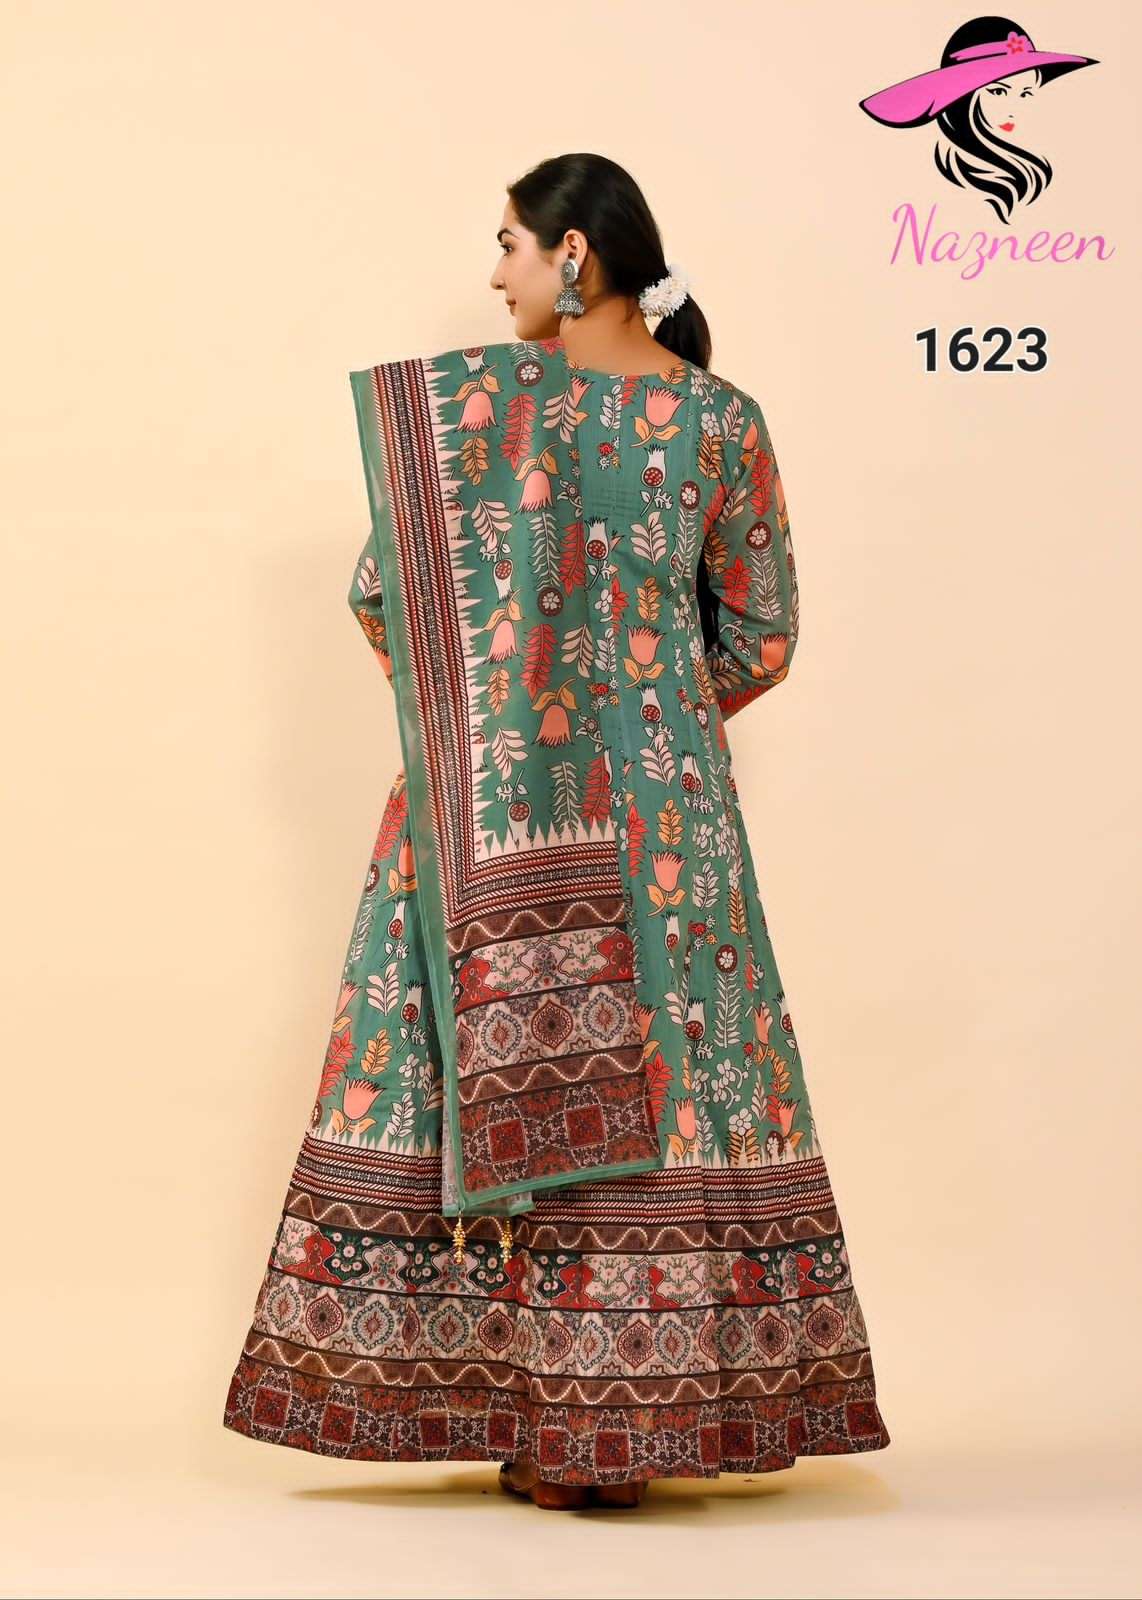 nazneen saawan 1620-1625 series latest fancy readymade gown wholesaler surat gujarat